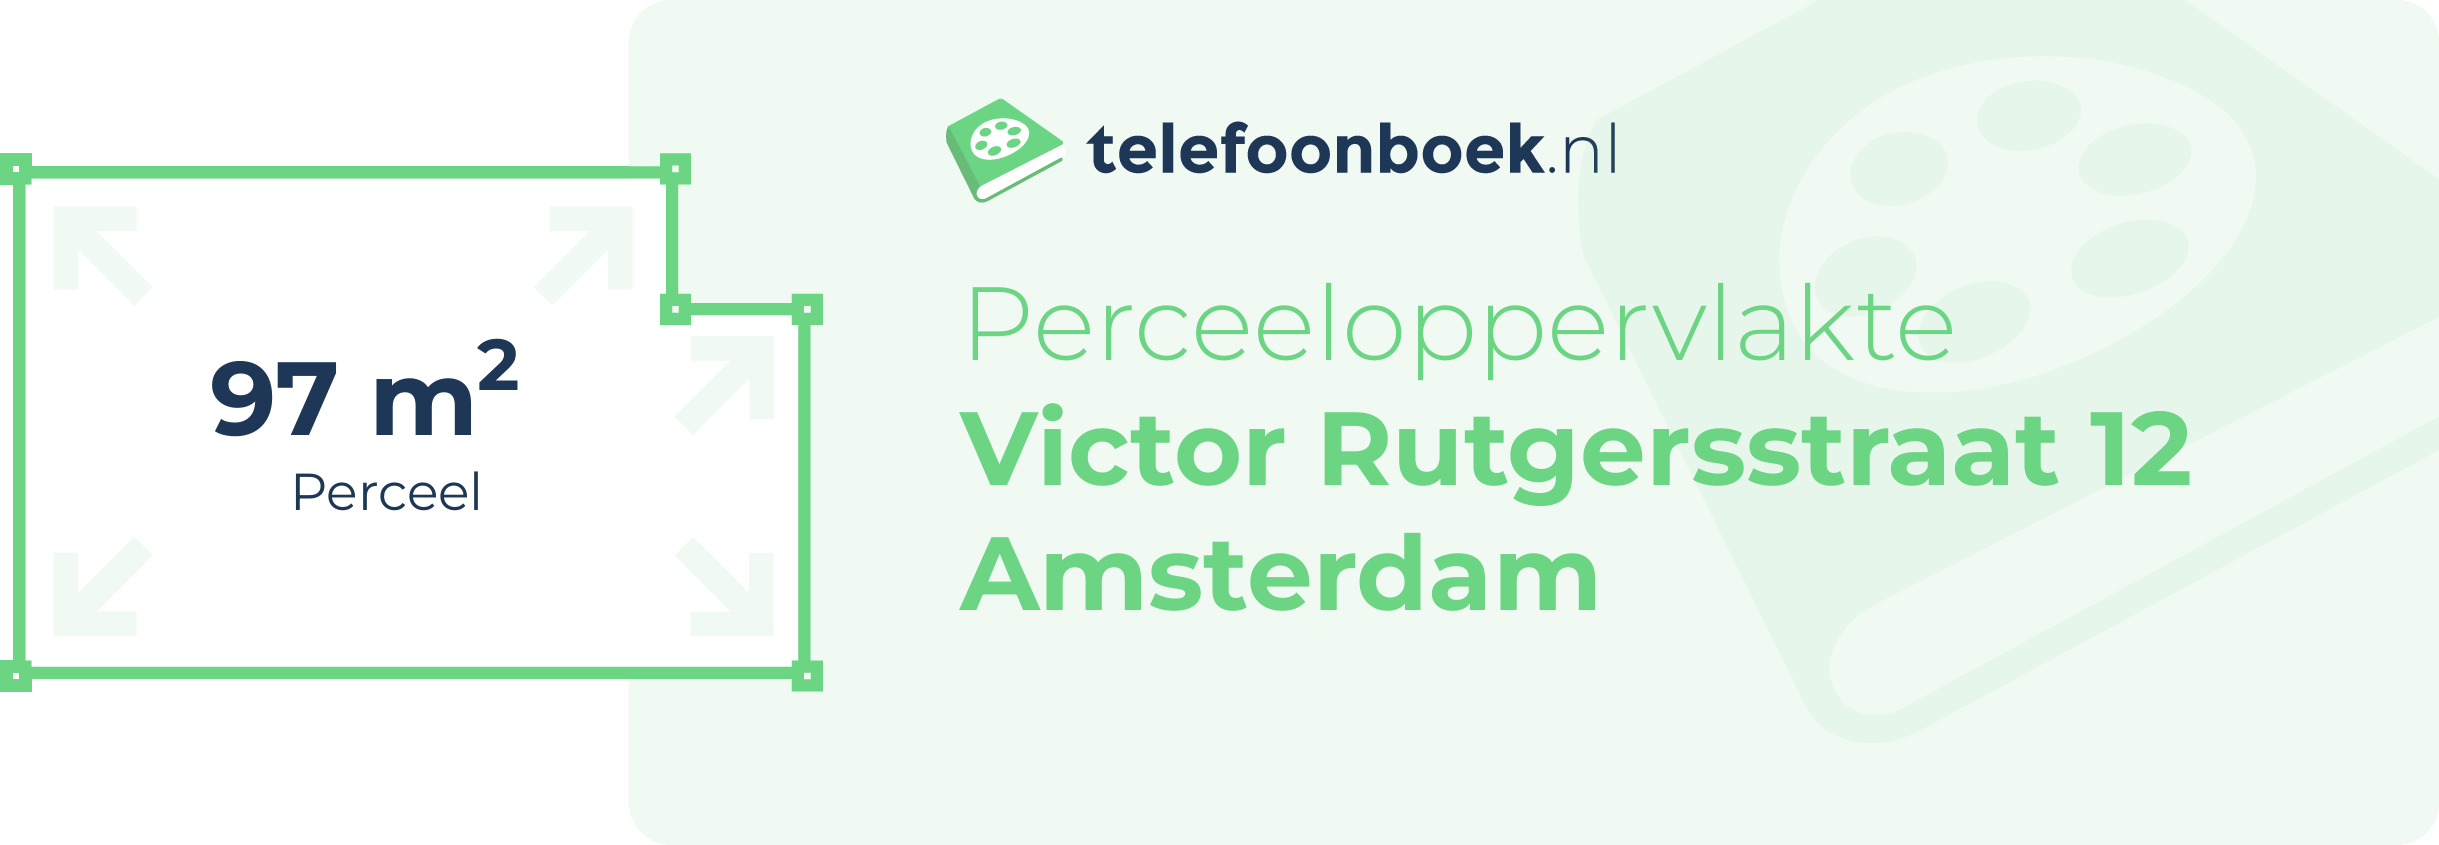 Perceeloppervlakte Victor Rutgersstraat 12 Amsterdam